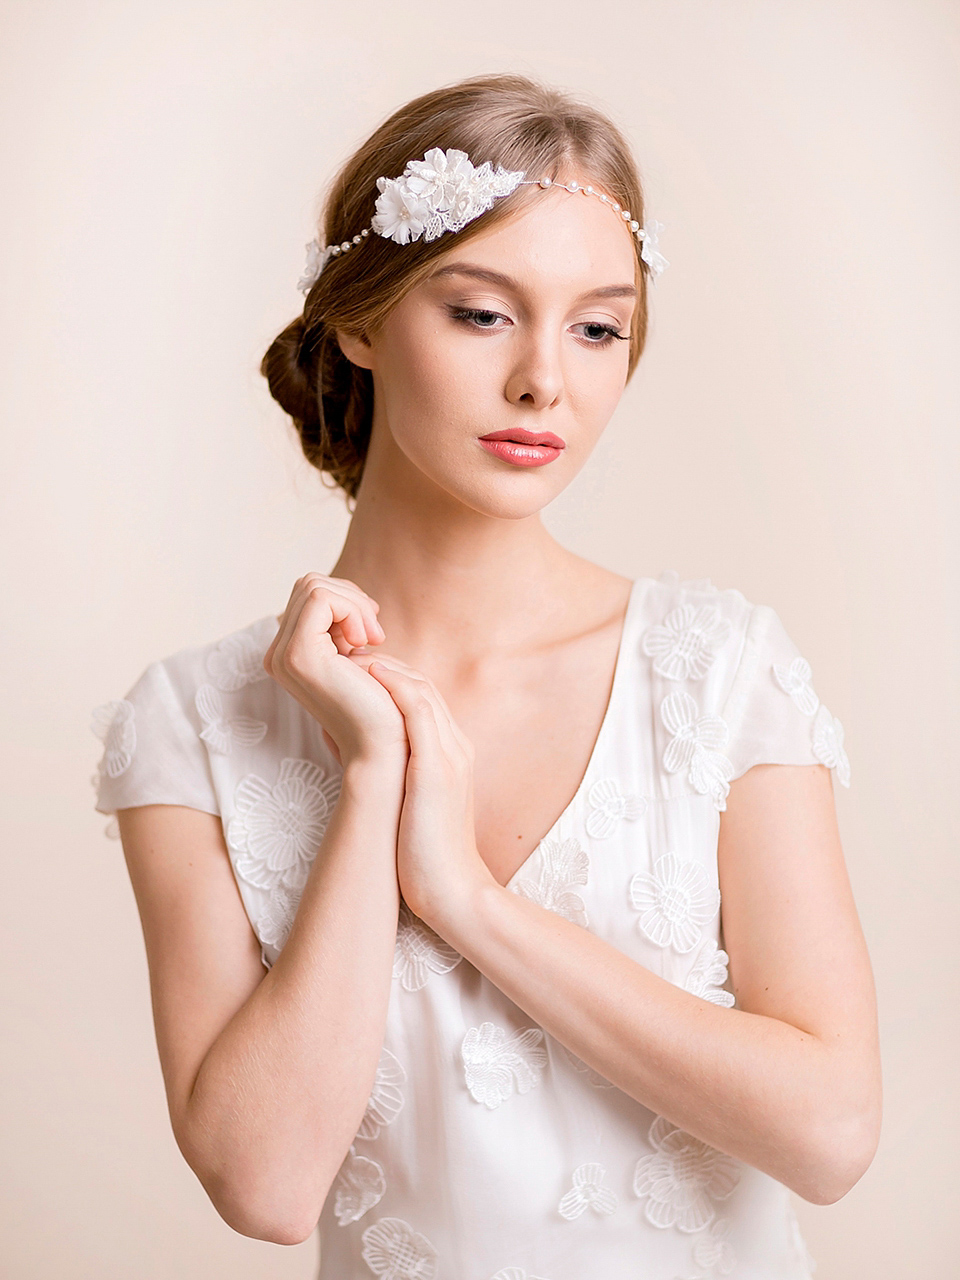 Florèntes - beautiful handmade floral headpieces for brides.